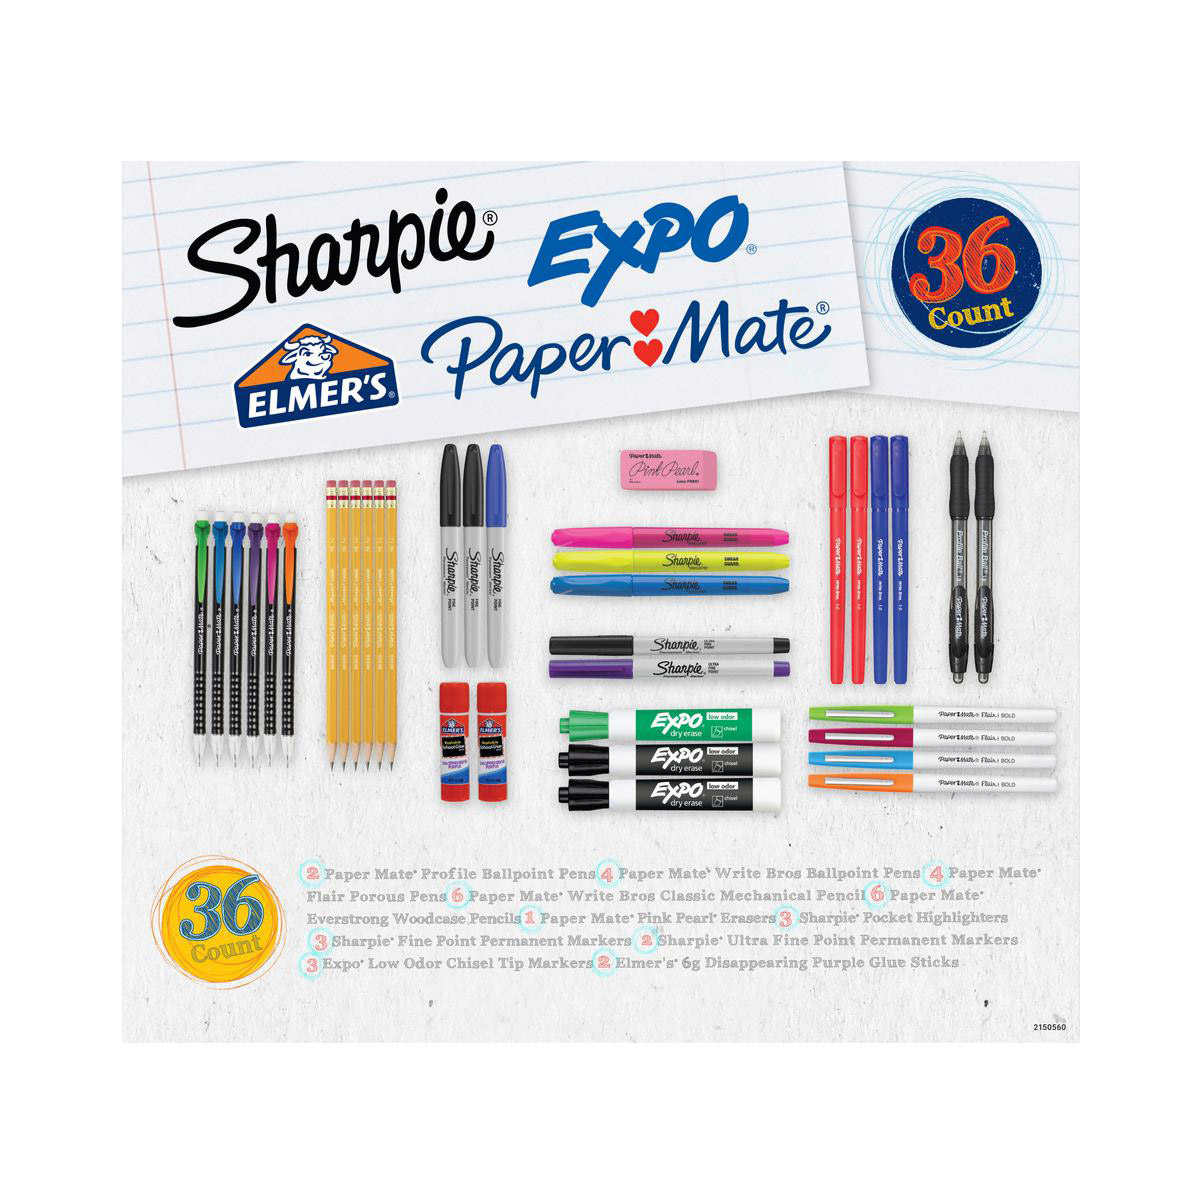 48-Pack of School Scissors - Bulk School Supplies Bundle Essential for  Students and Teachers